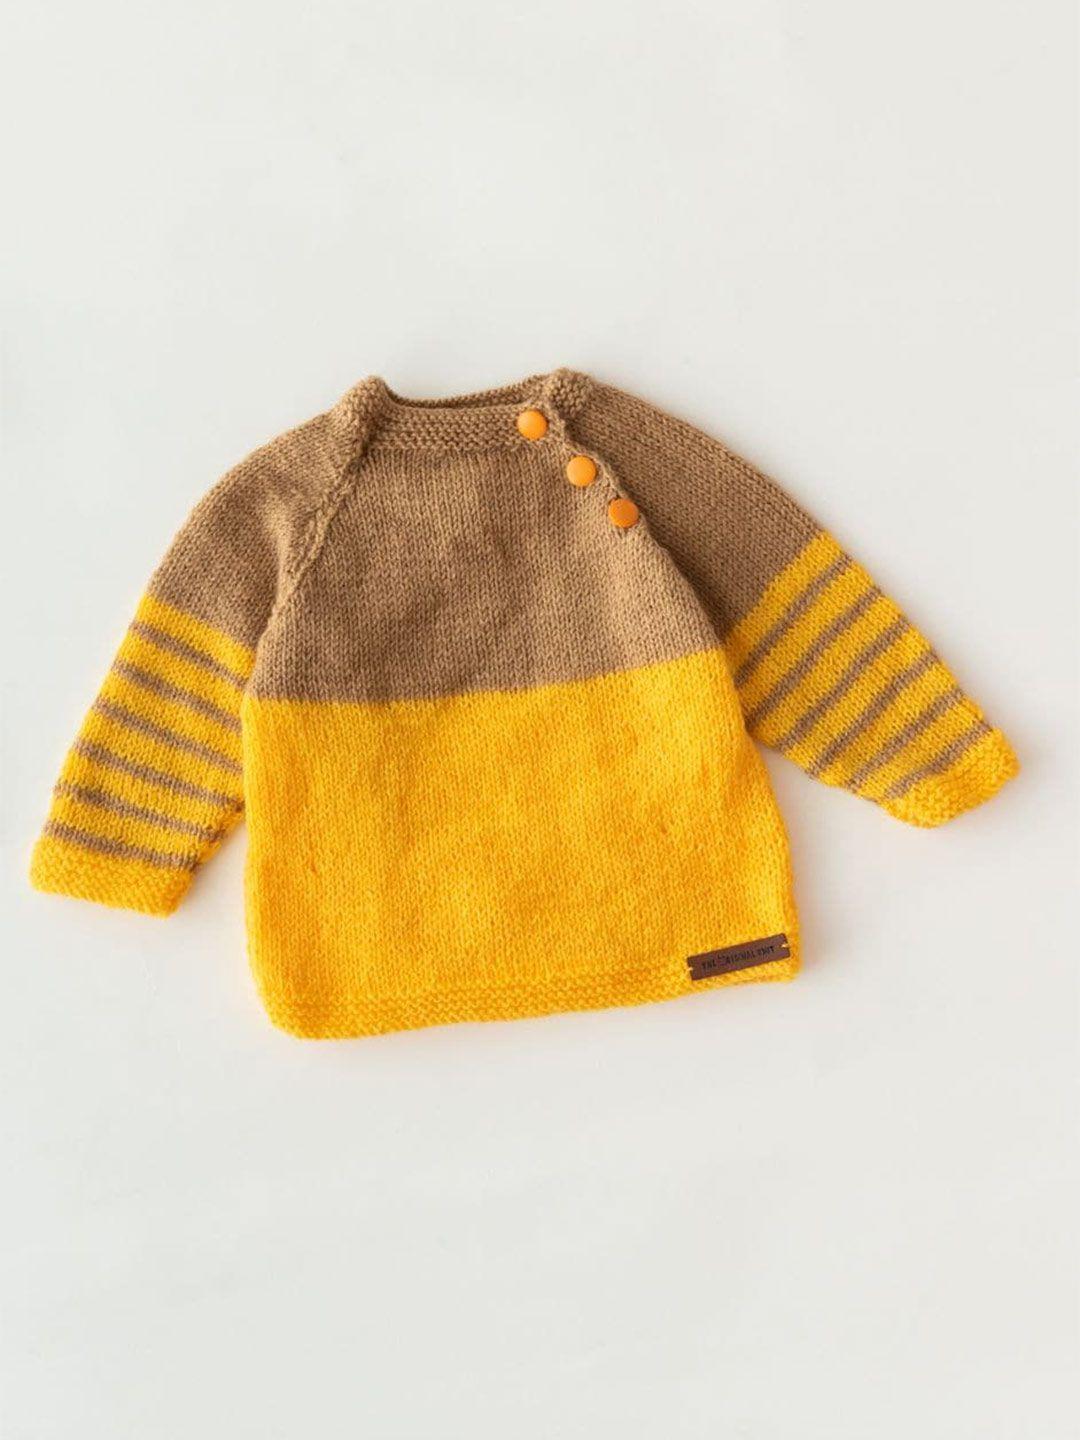 the original knit unisex kids beige & yellow colourblocked pullover